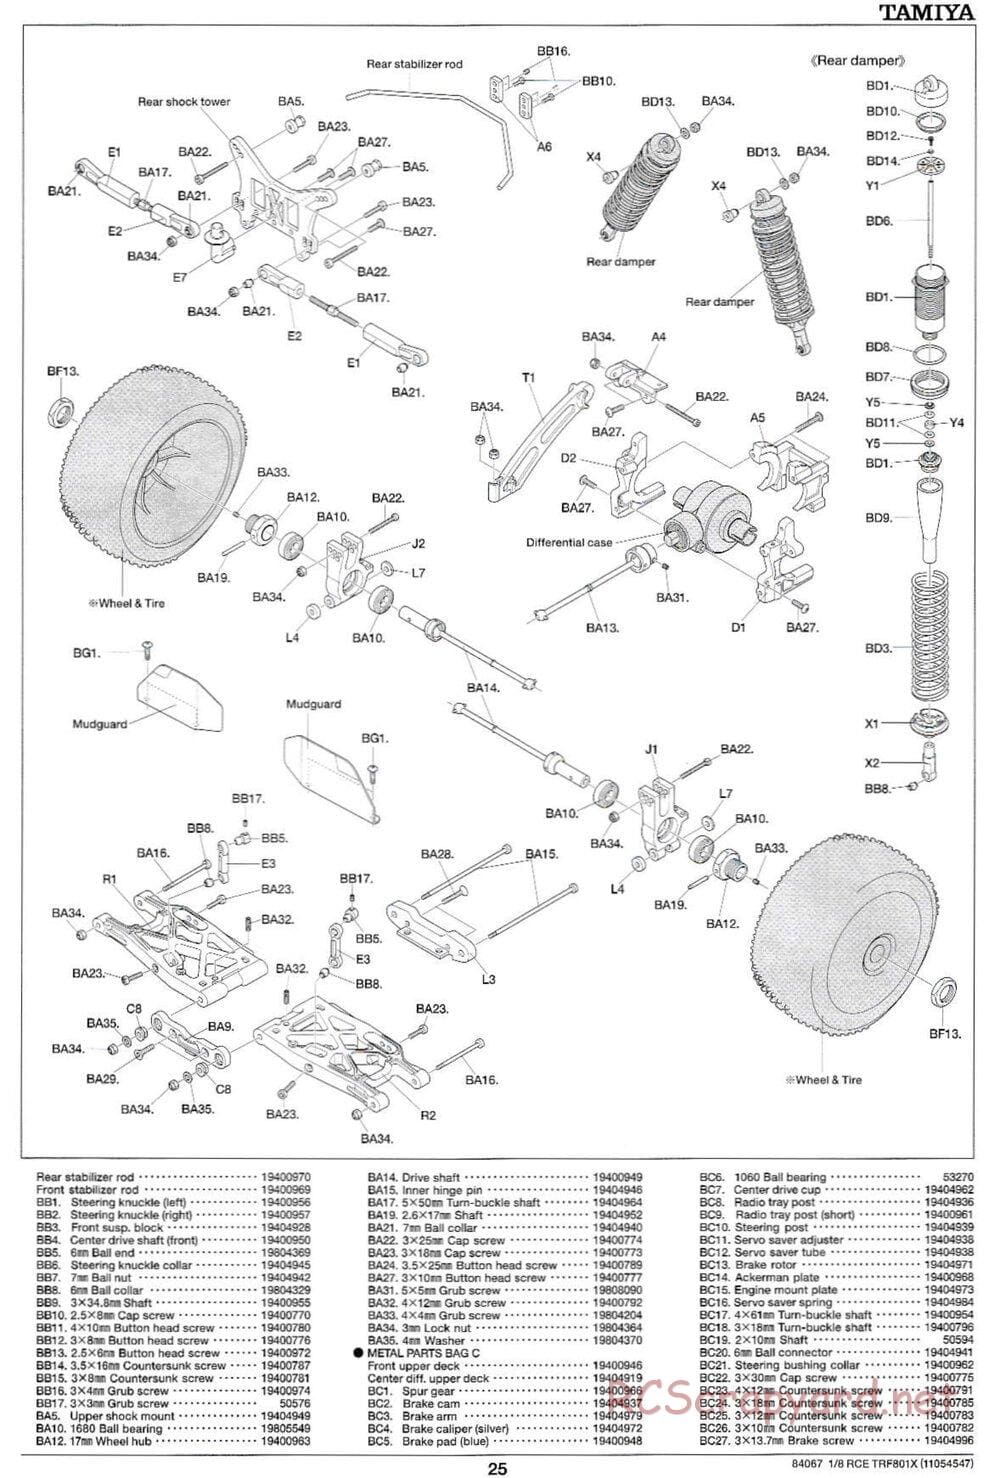 Tamiya - TRF801X Chassis - Manual - Page 25